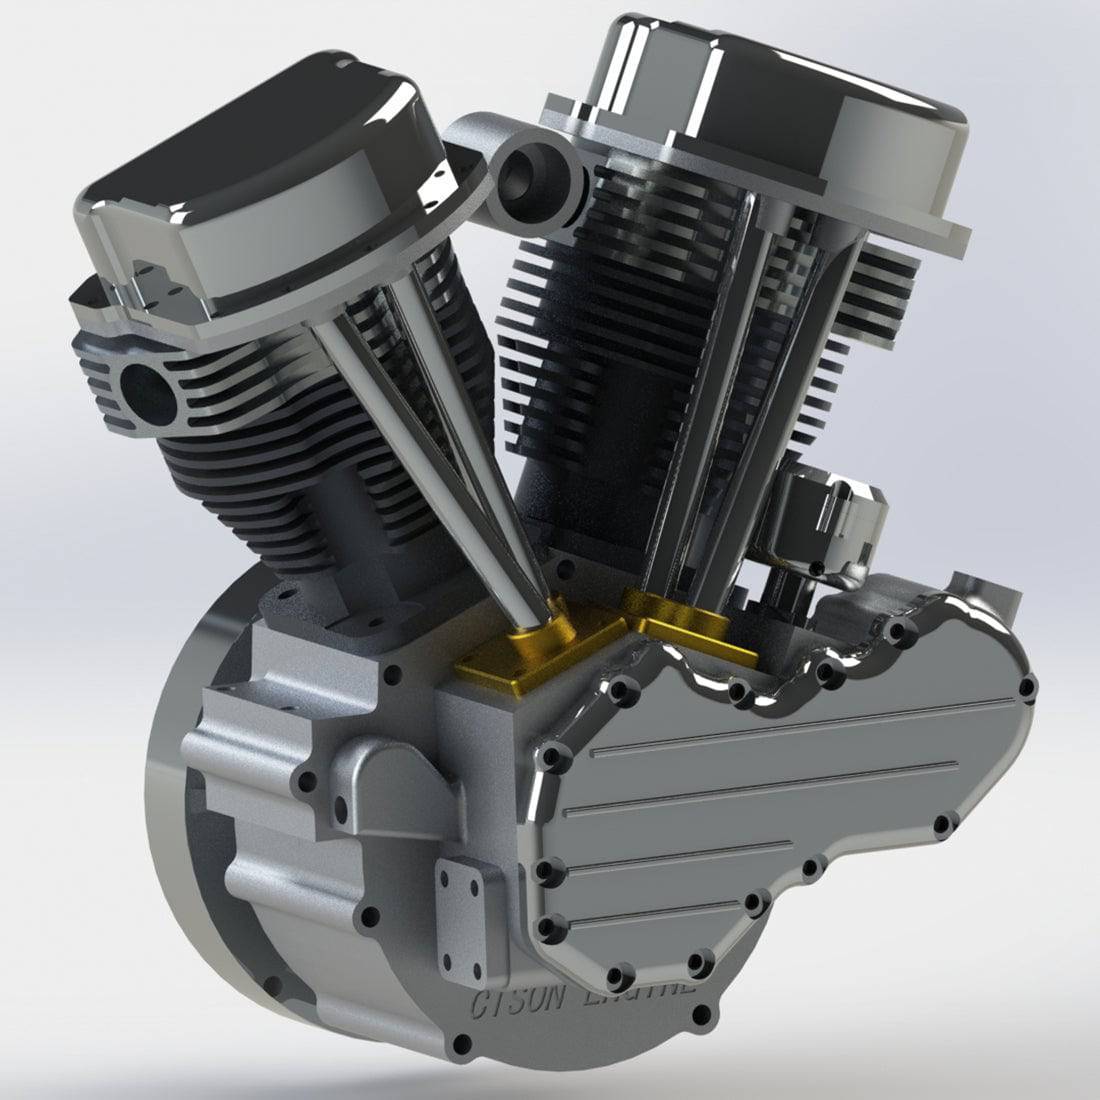 FG-VT9 9cc V-twin V2 Engine Four-stroke Air-cooled Motorcycle RC Gasoline Engine